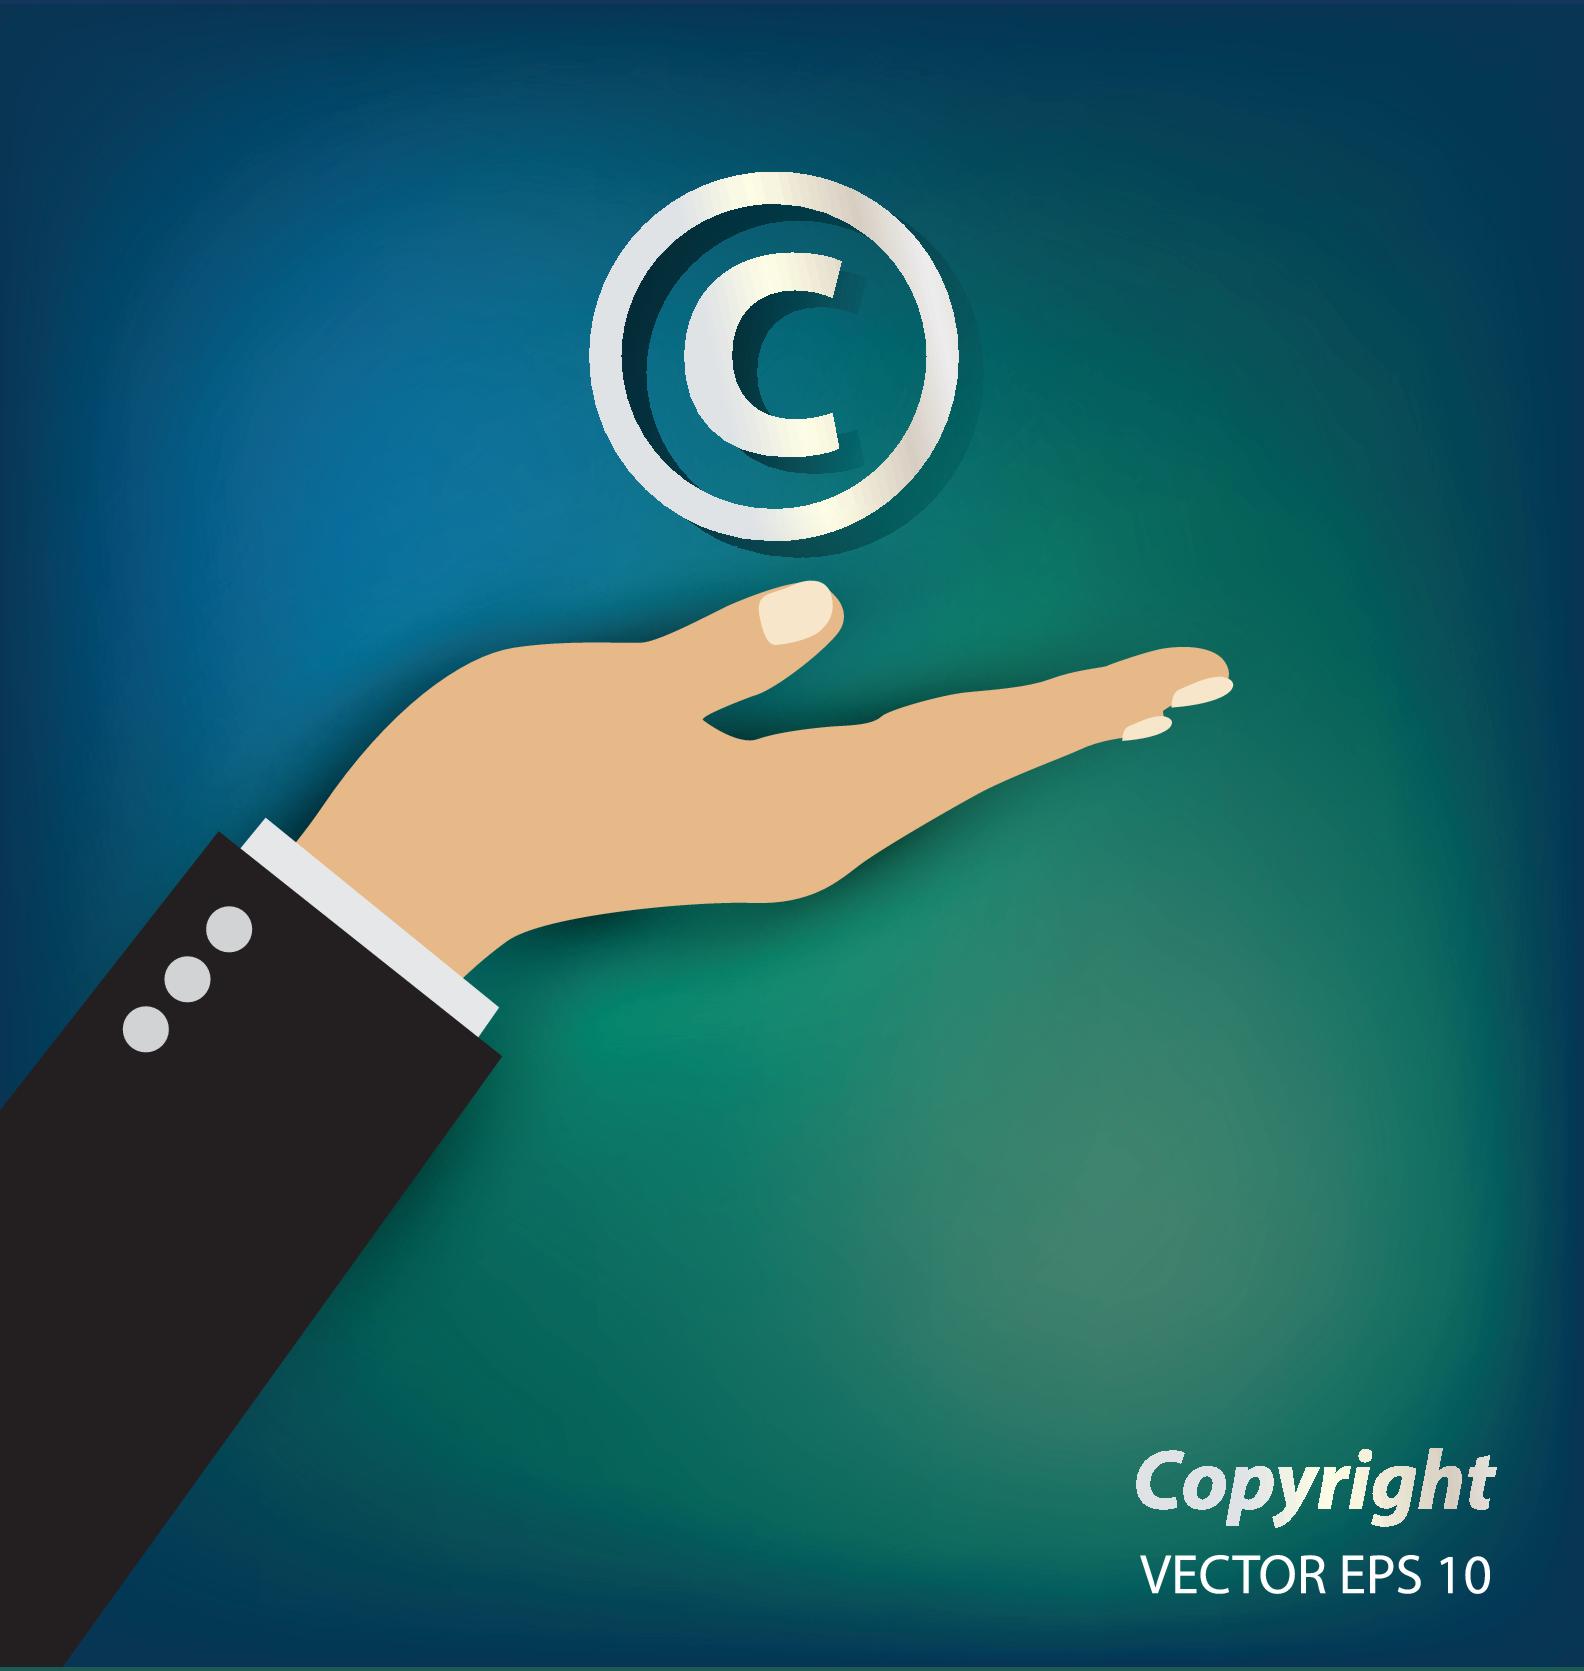 Creative copyright business vector design 01